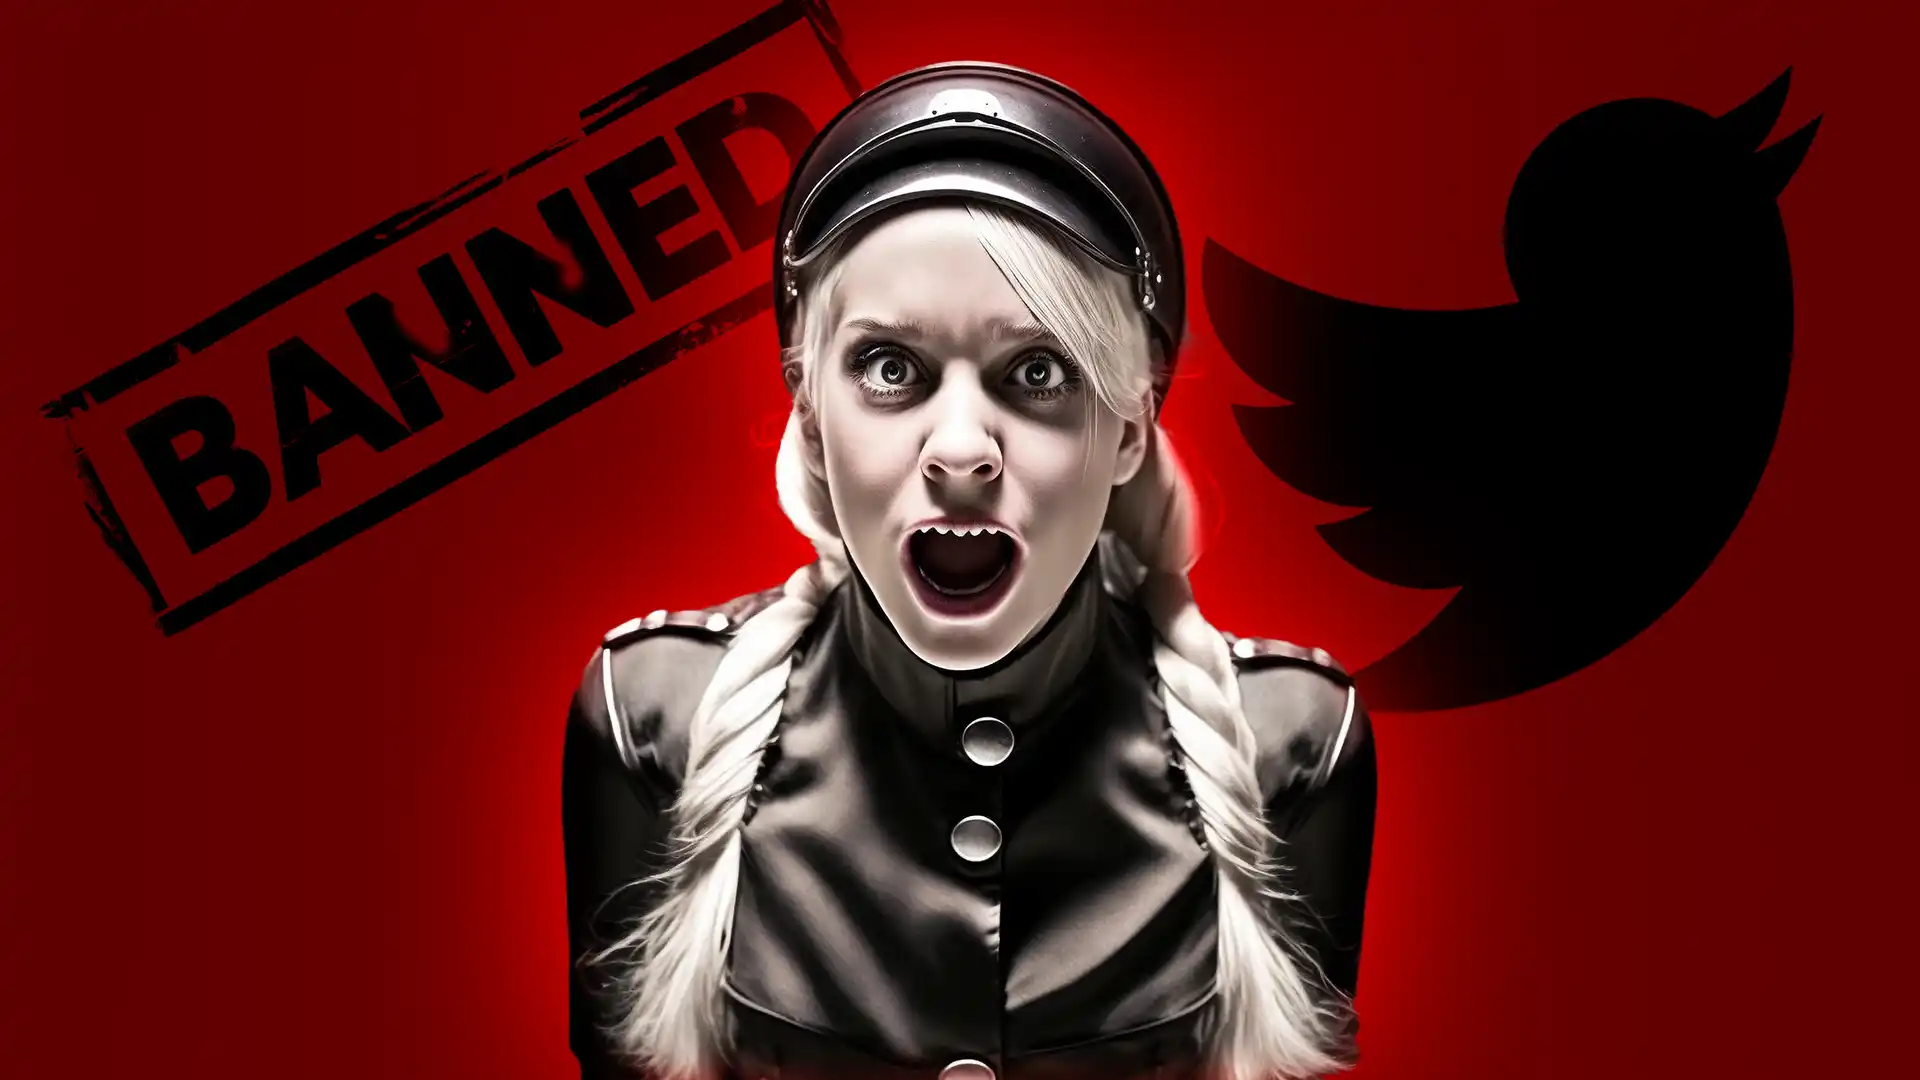 Blond woman in Nazi uniform representing Marina Seren's controversial online persona.